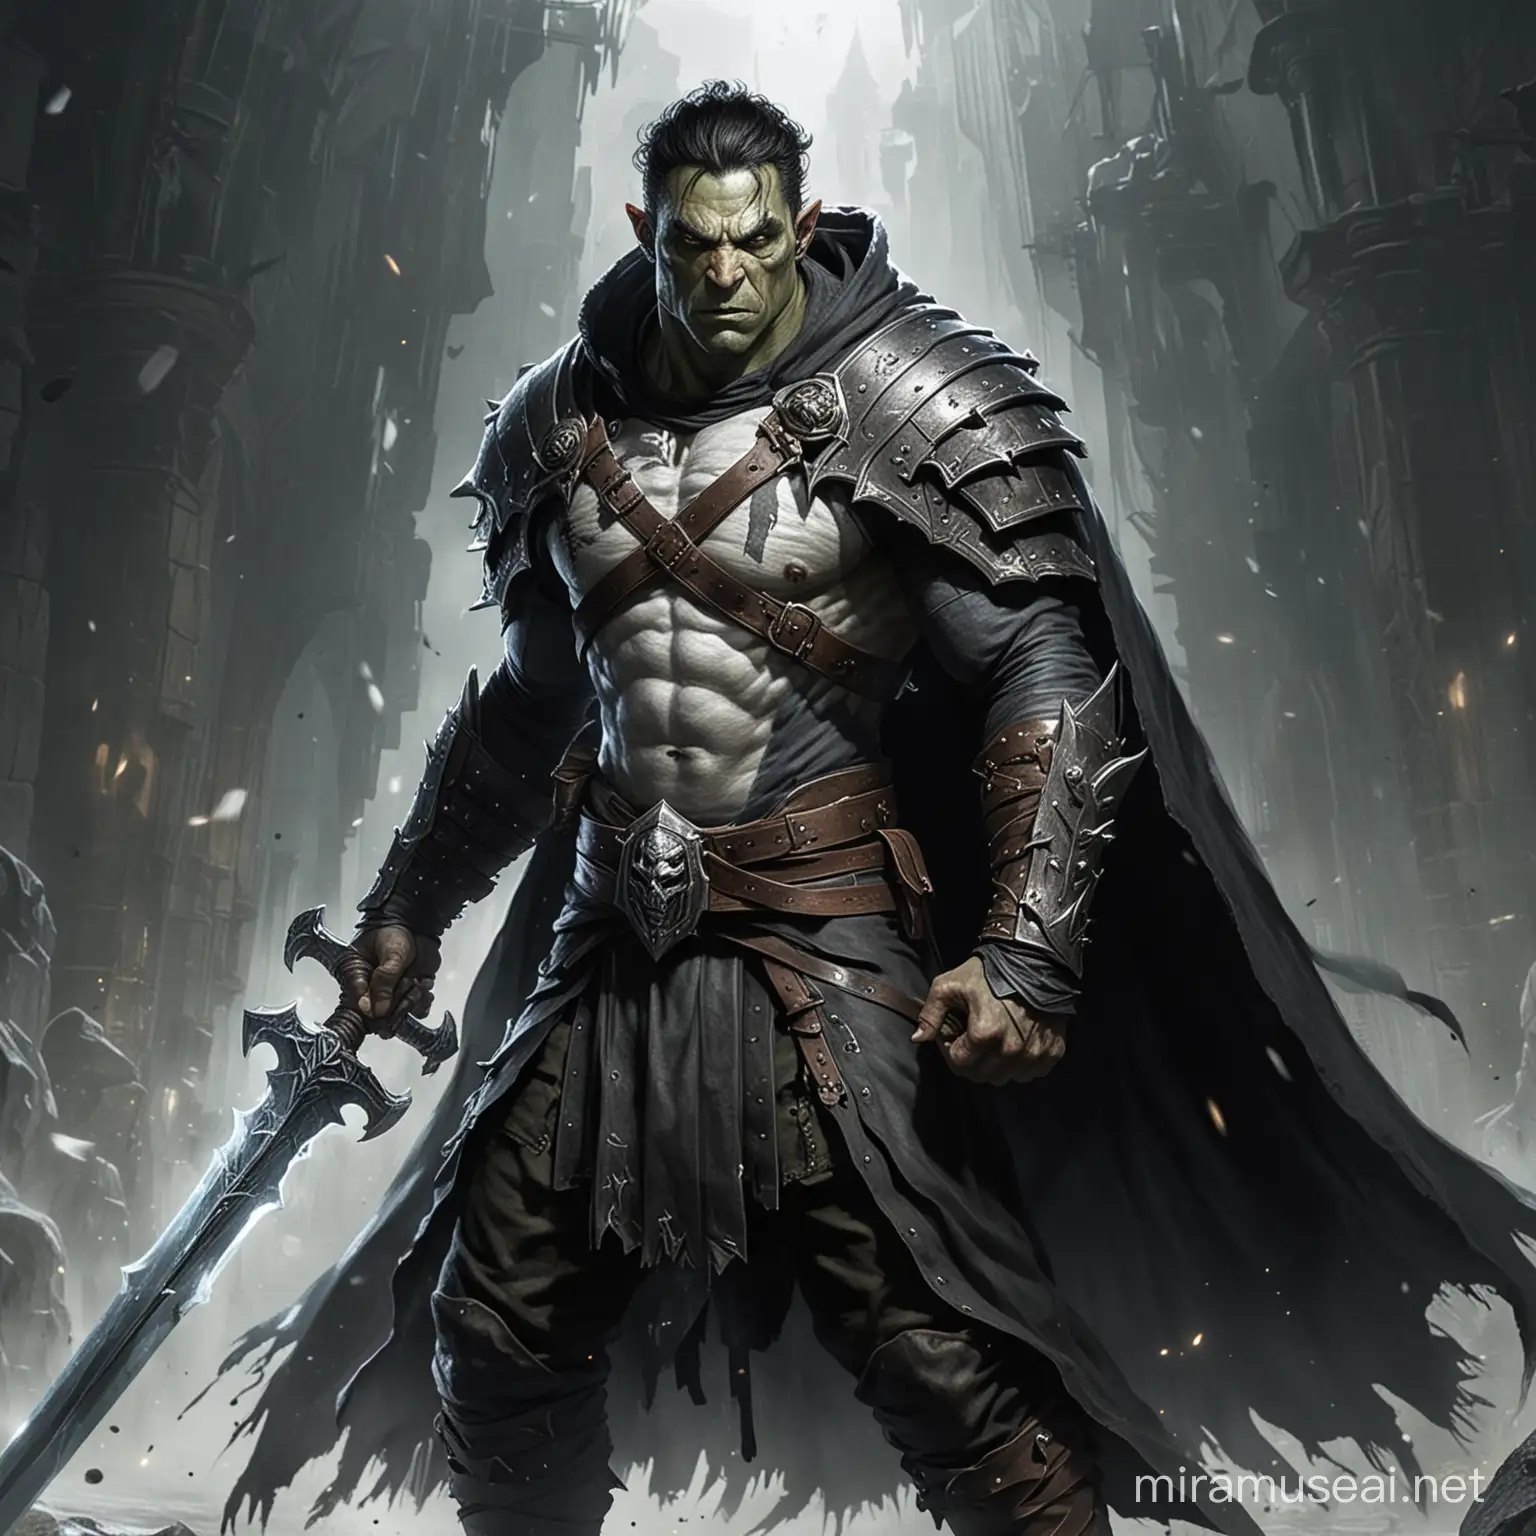 muscular half-orc, wielding a greatsword, white ghosts behind, black cloak on him